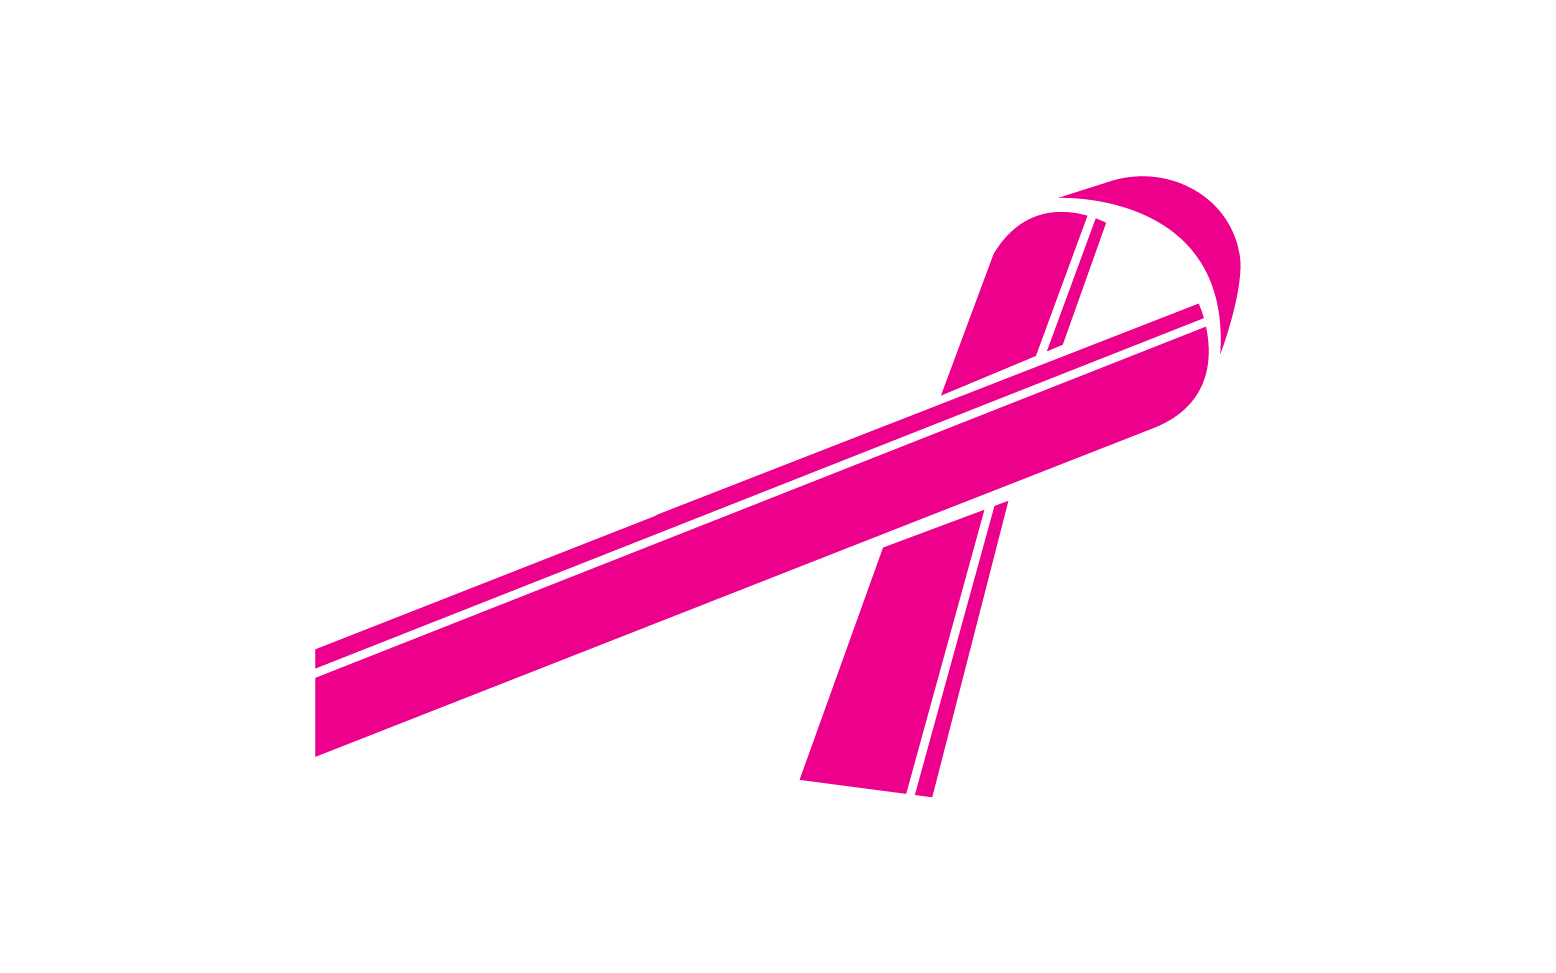 Ribbon pink icon logo element version v12